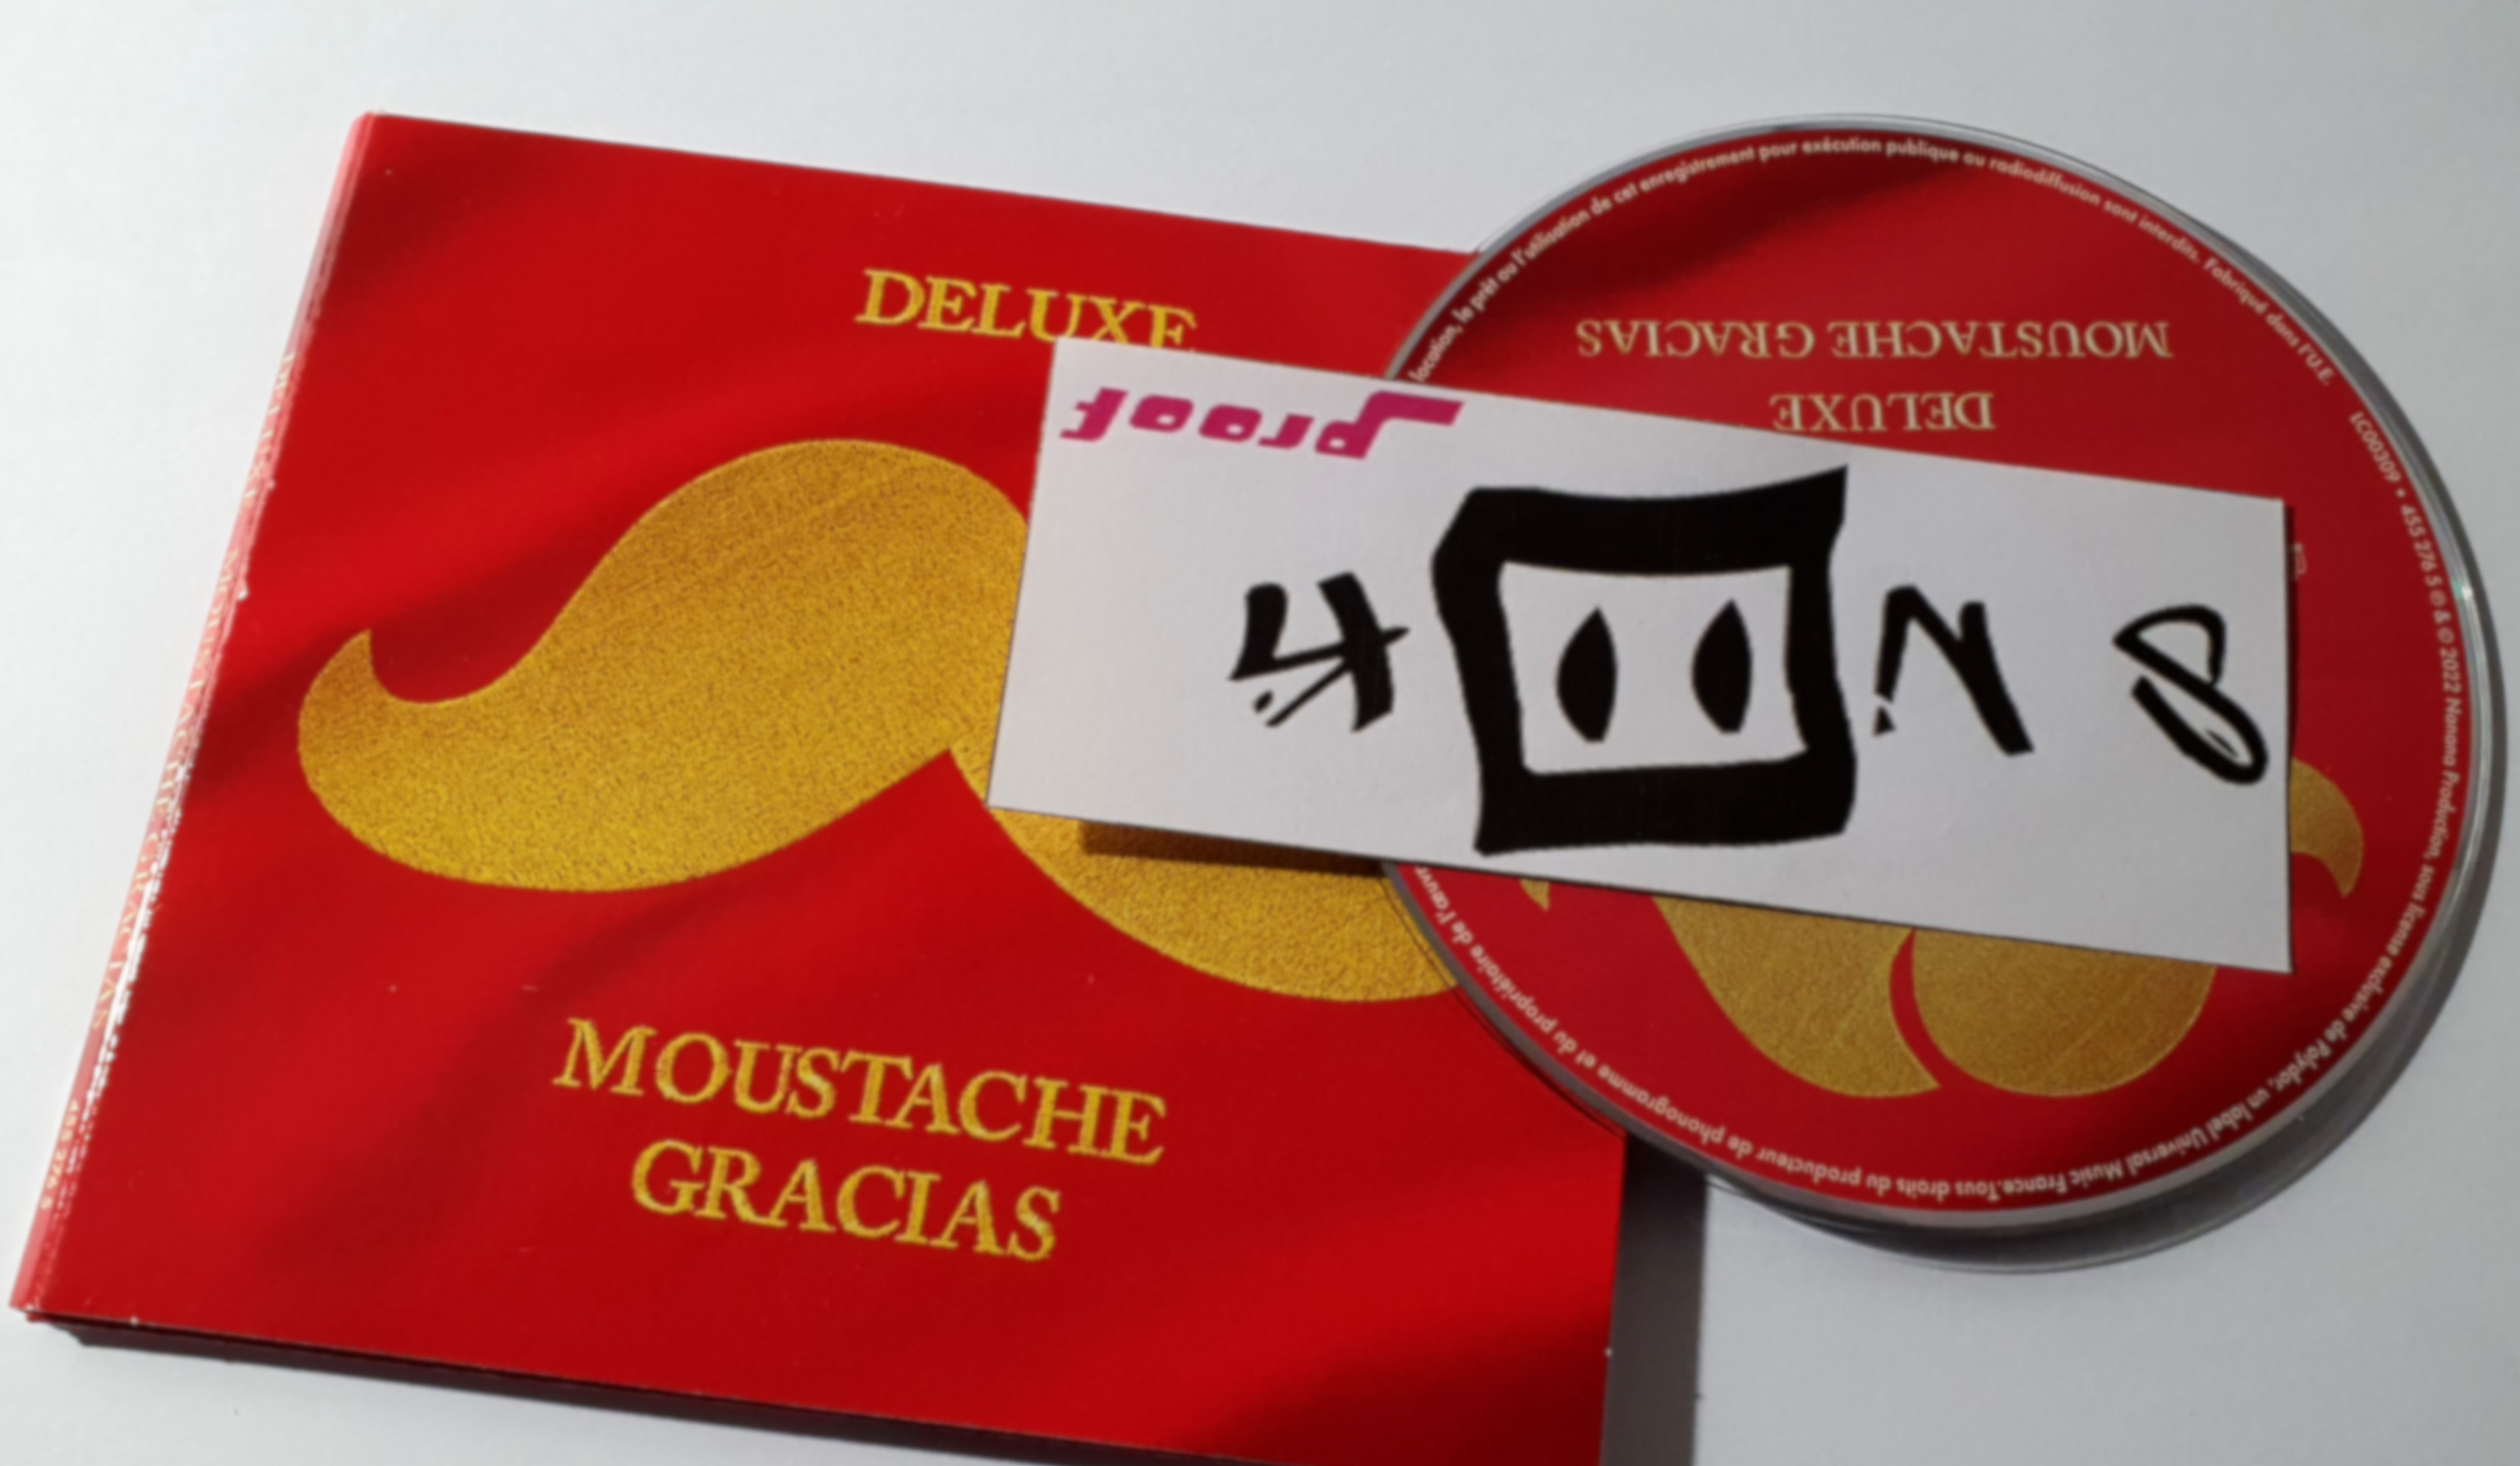 Deluxe-Moustache_Gracias-FR-2022-SNOOK 00-del13